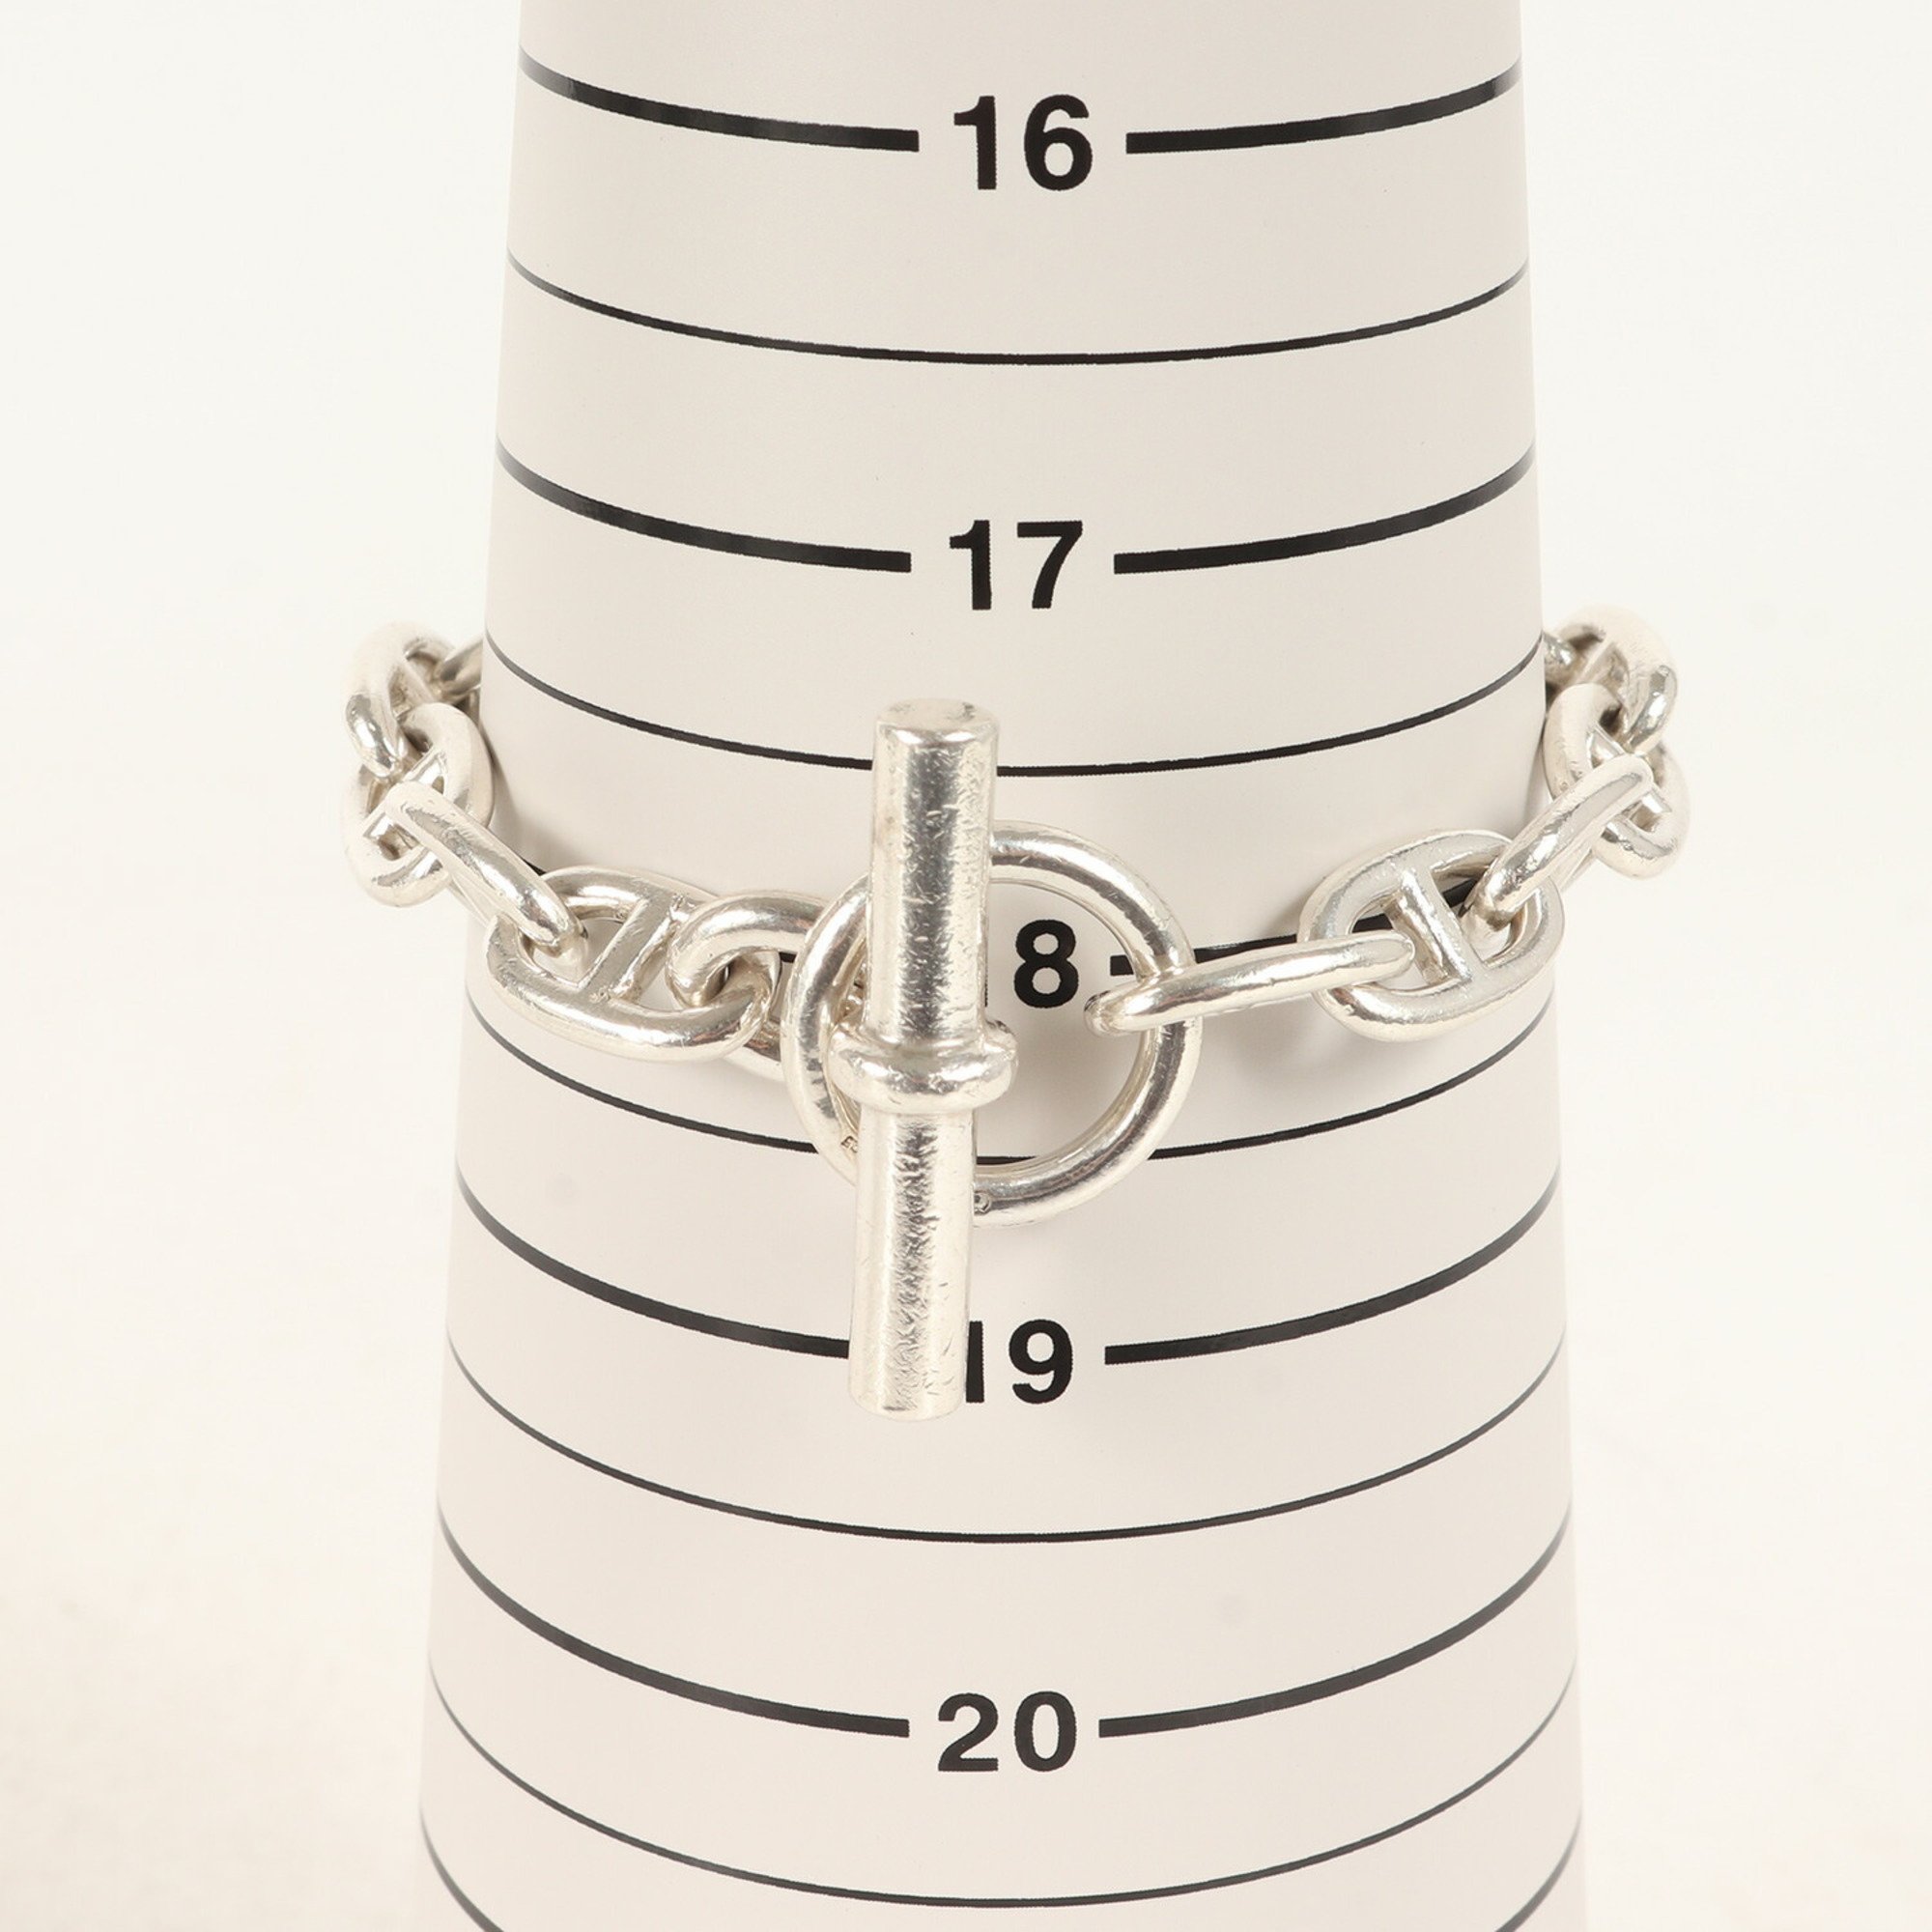 HERMES Chaine dancre Bracelet MM 16Link Silver Handmade Stamped Ag925 16 Links Men's